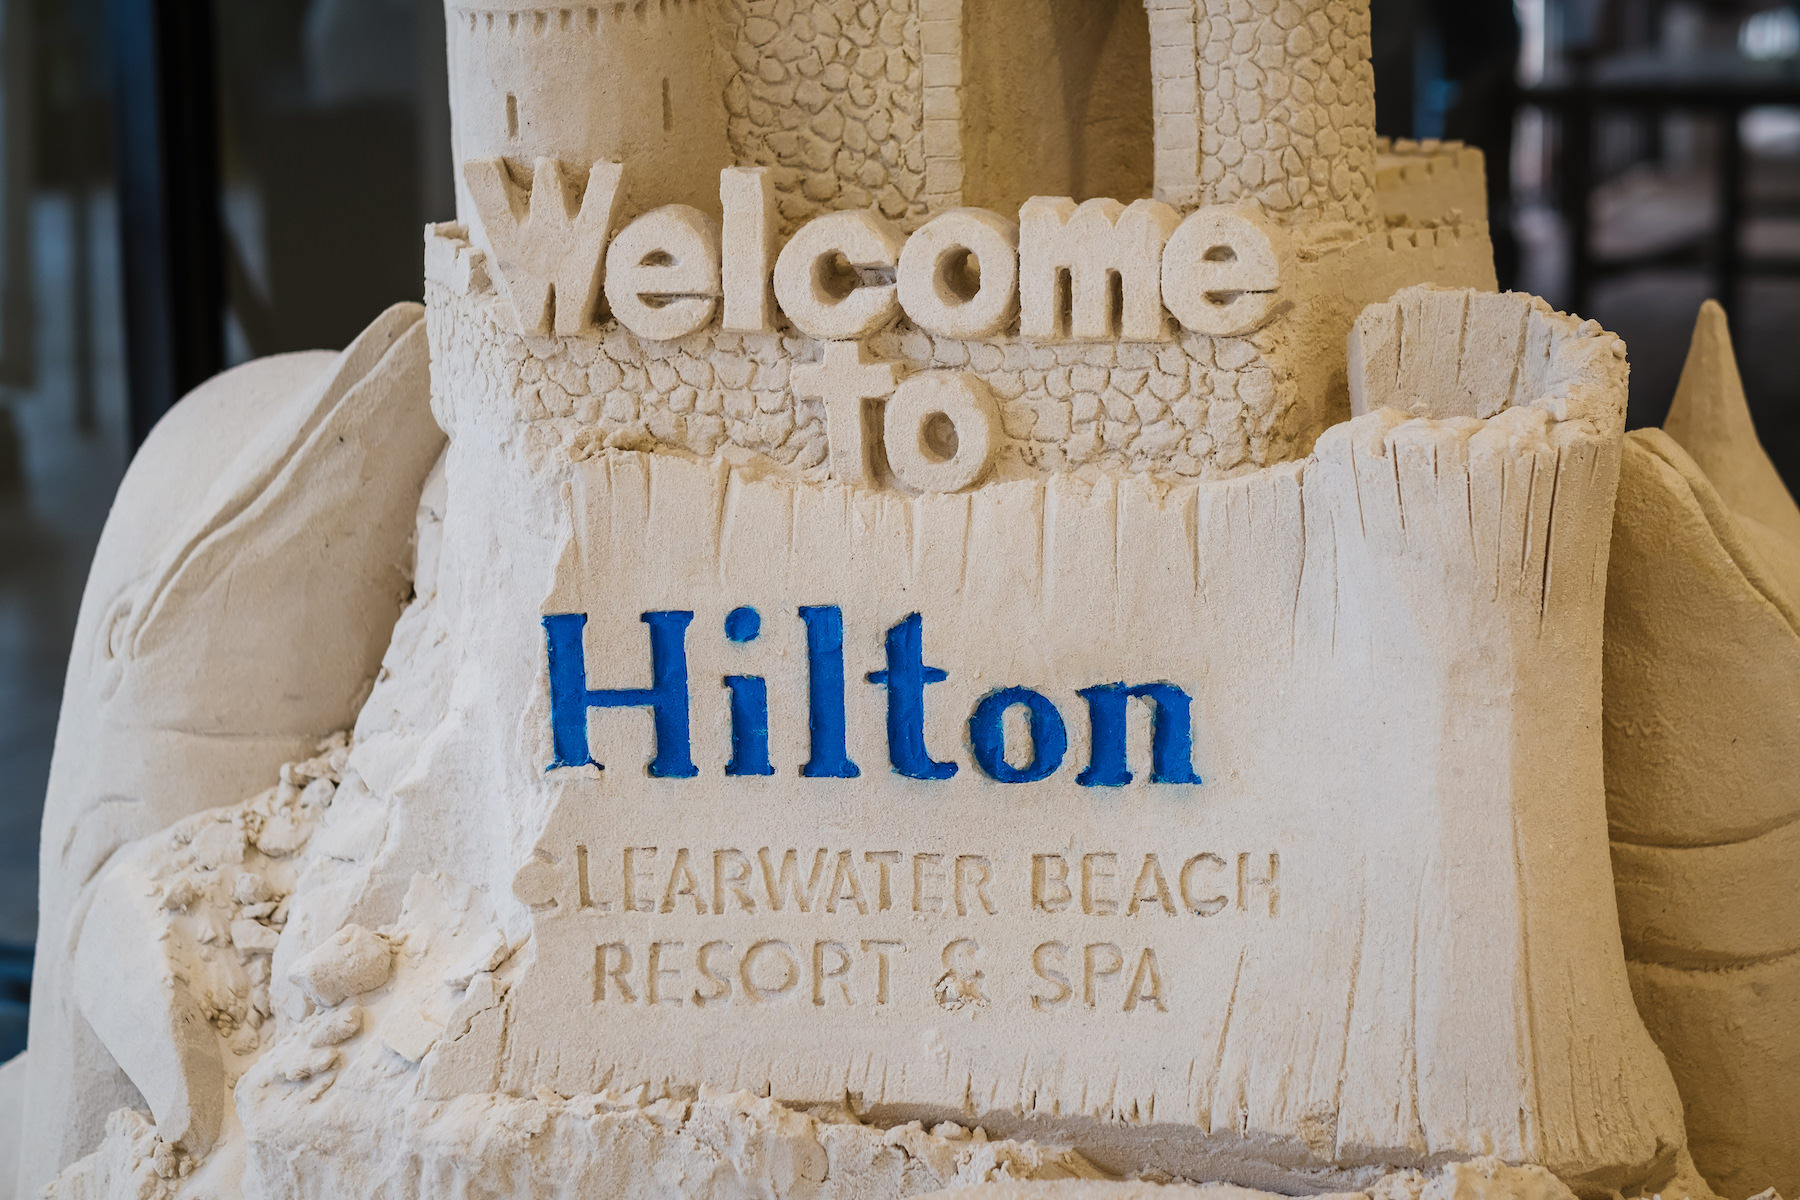 Tampa Bay Waterfront Beach Hotel Wedding Venue Hilton Clearwater Beach